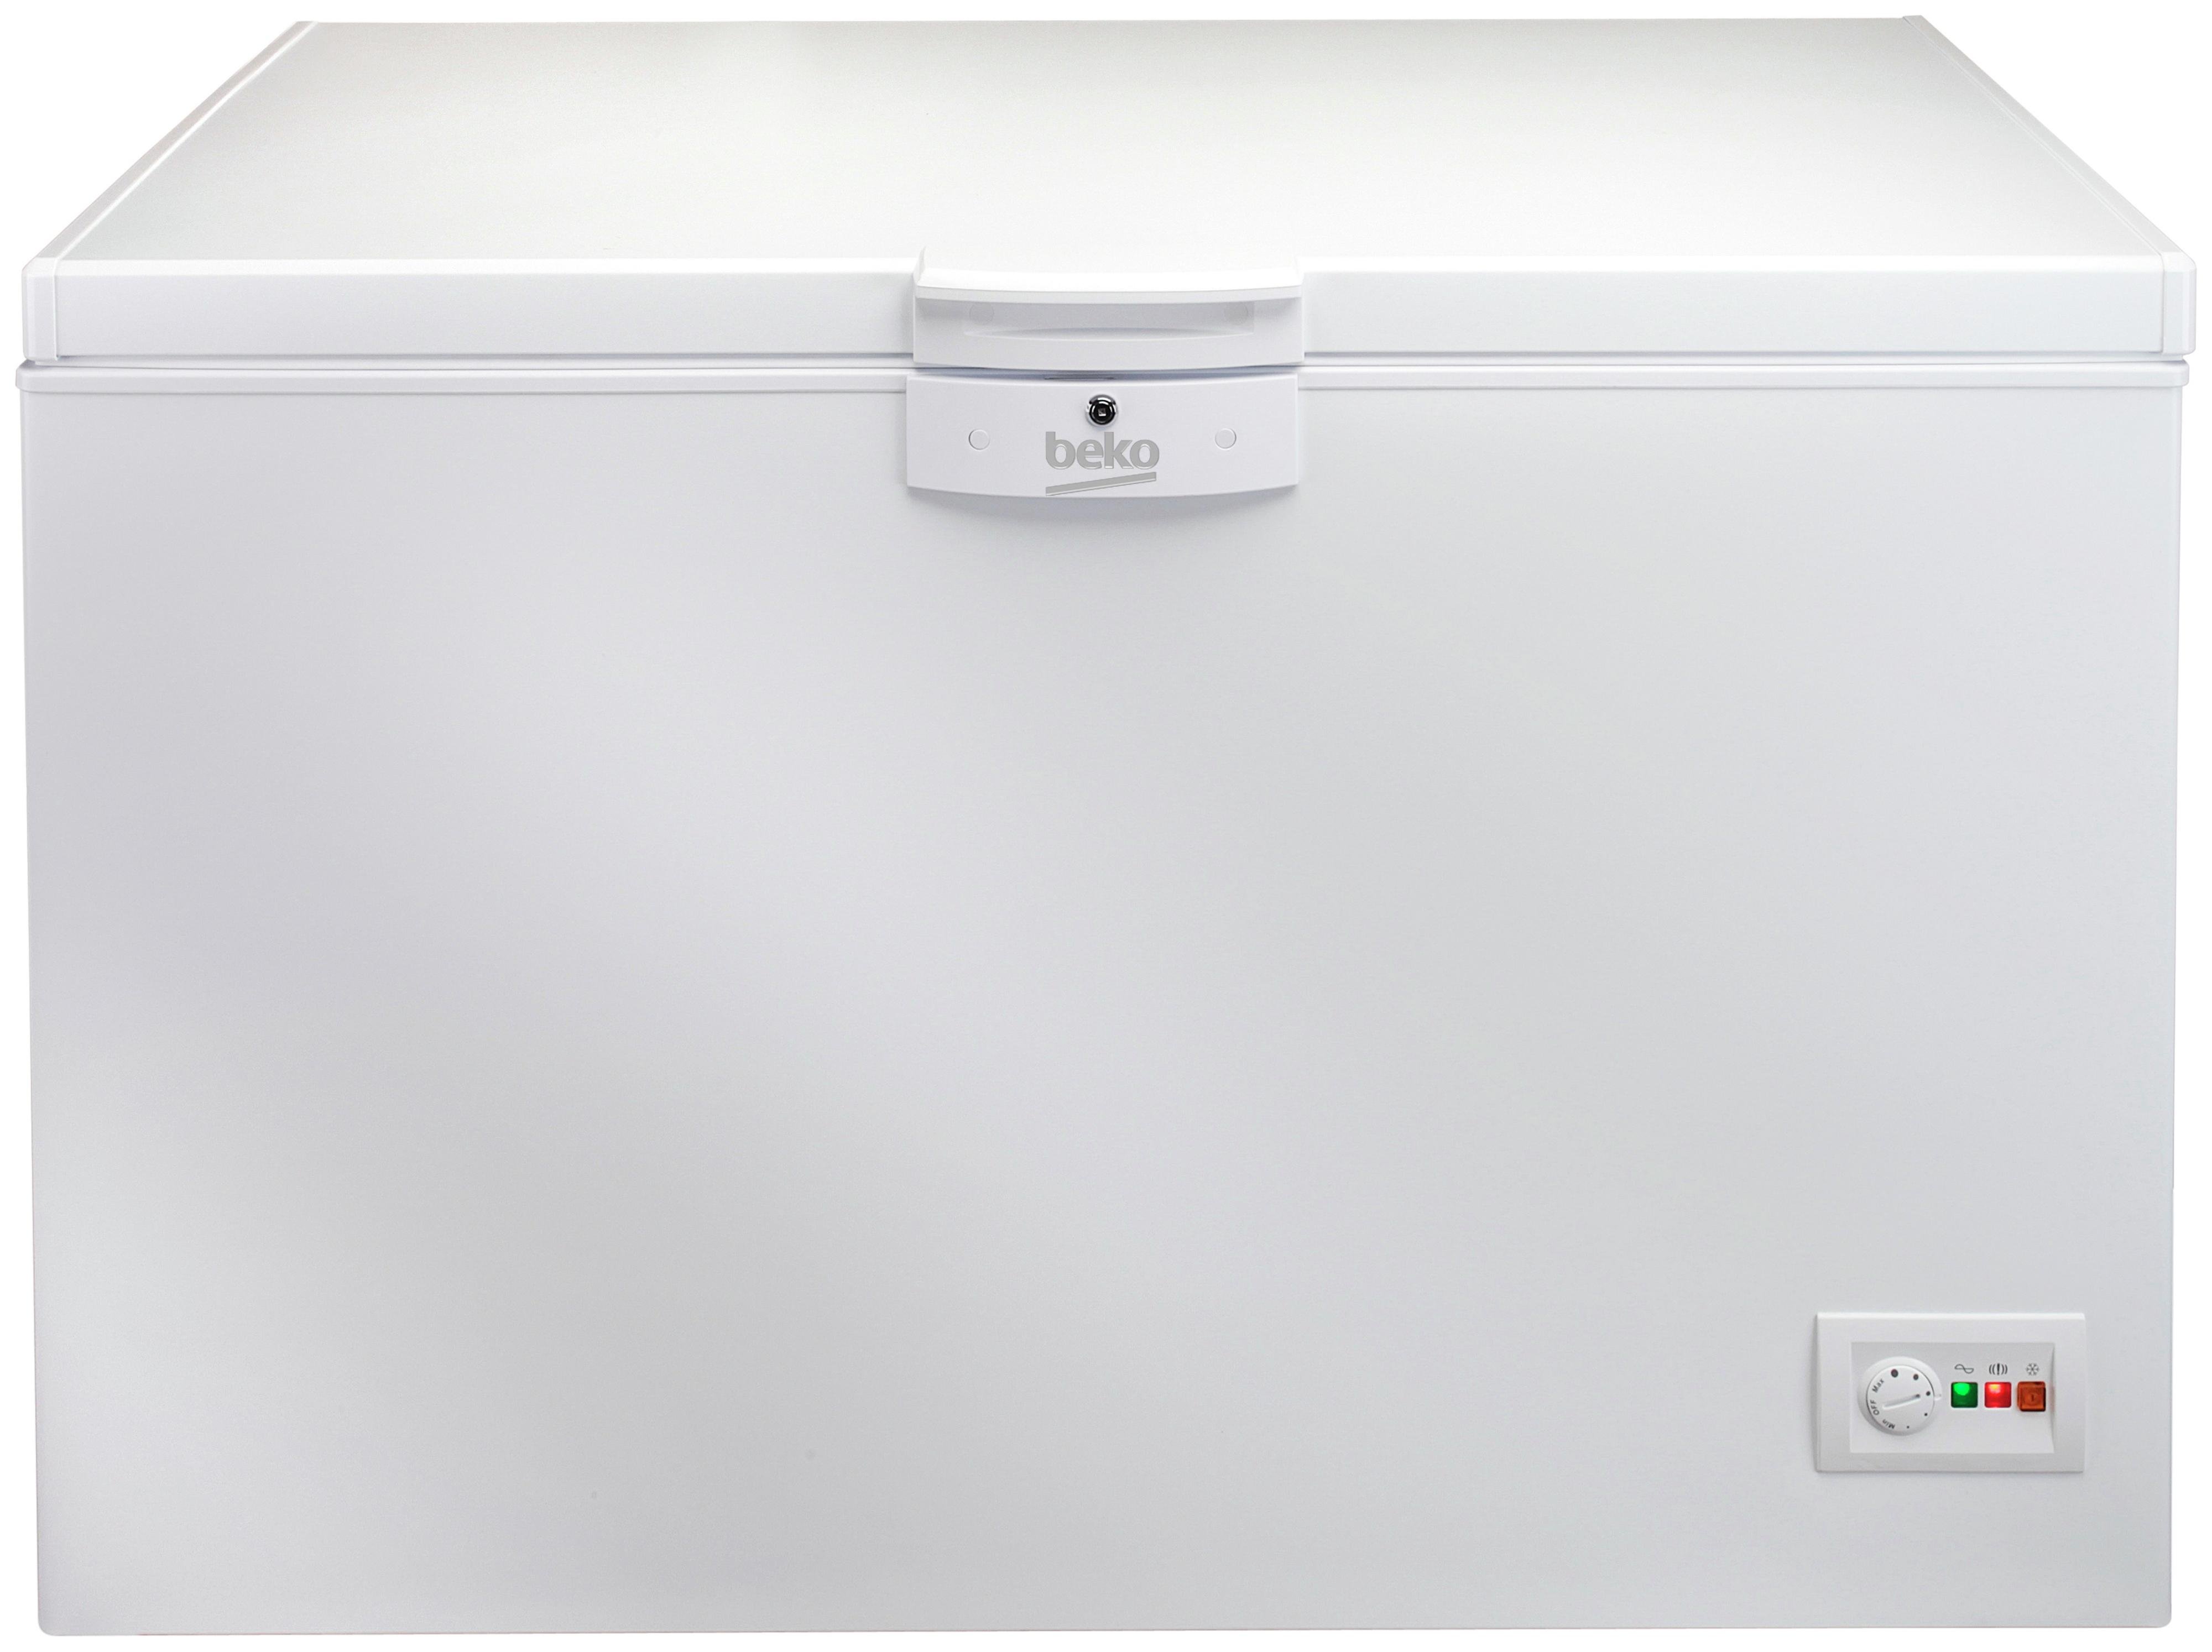 Beko CF1300APW Large Capacity Chest Freezer - White